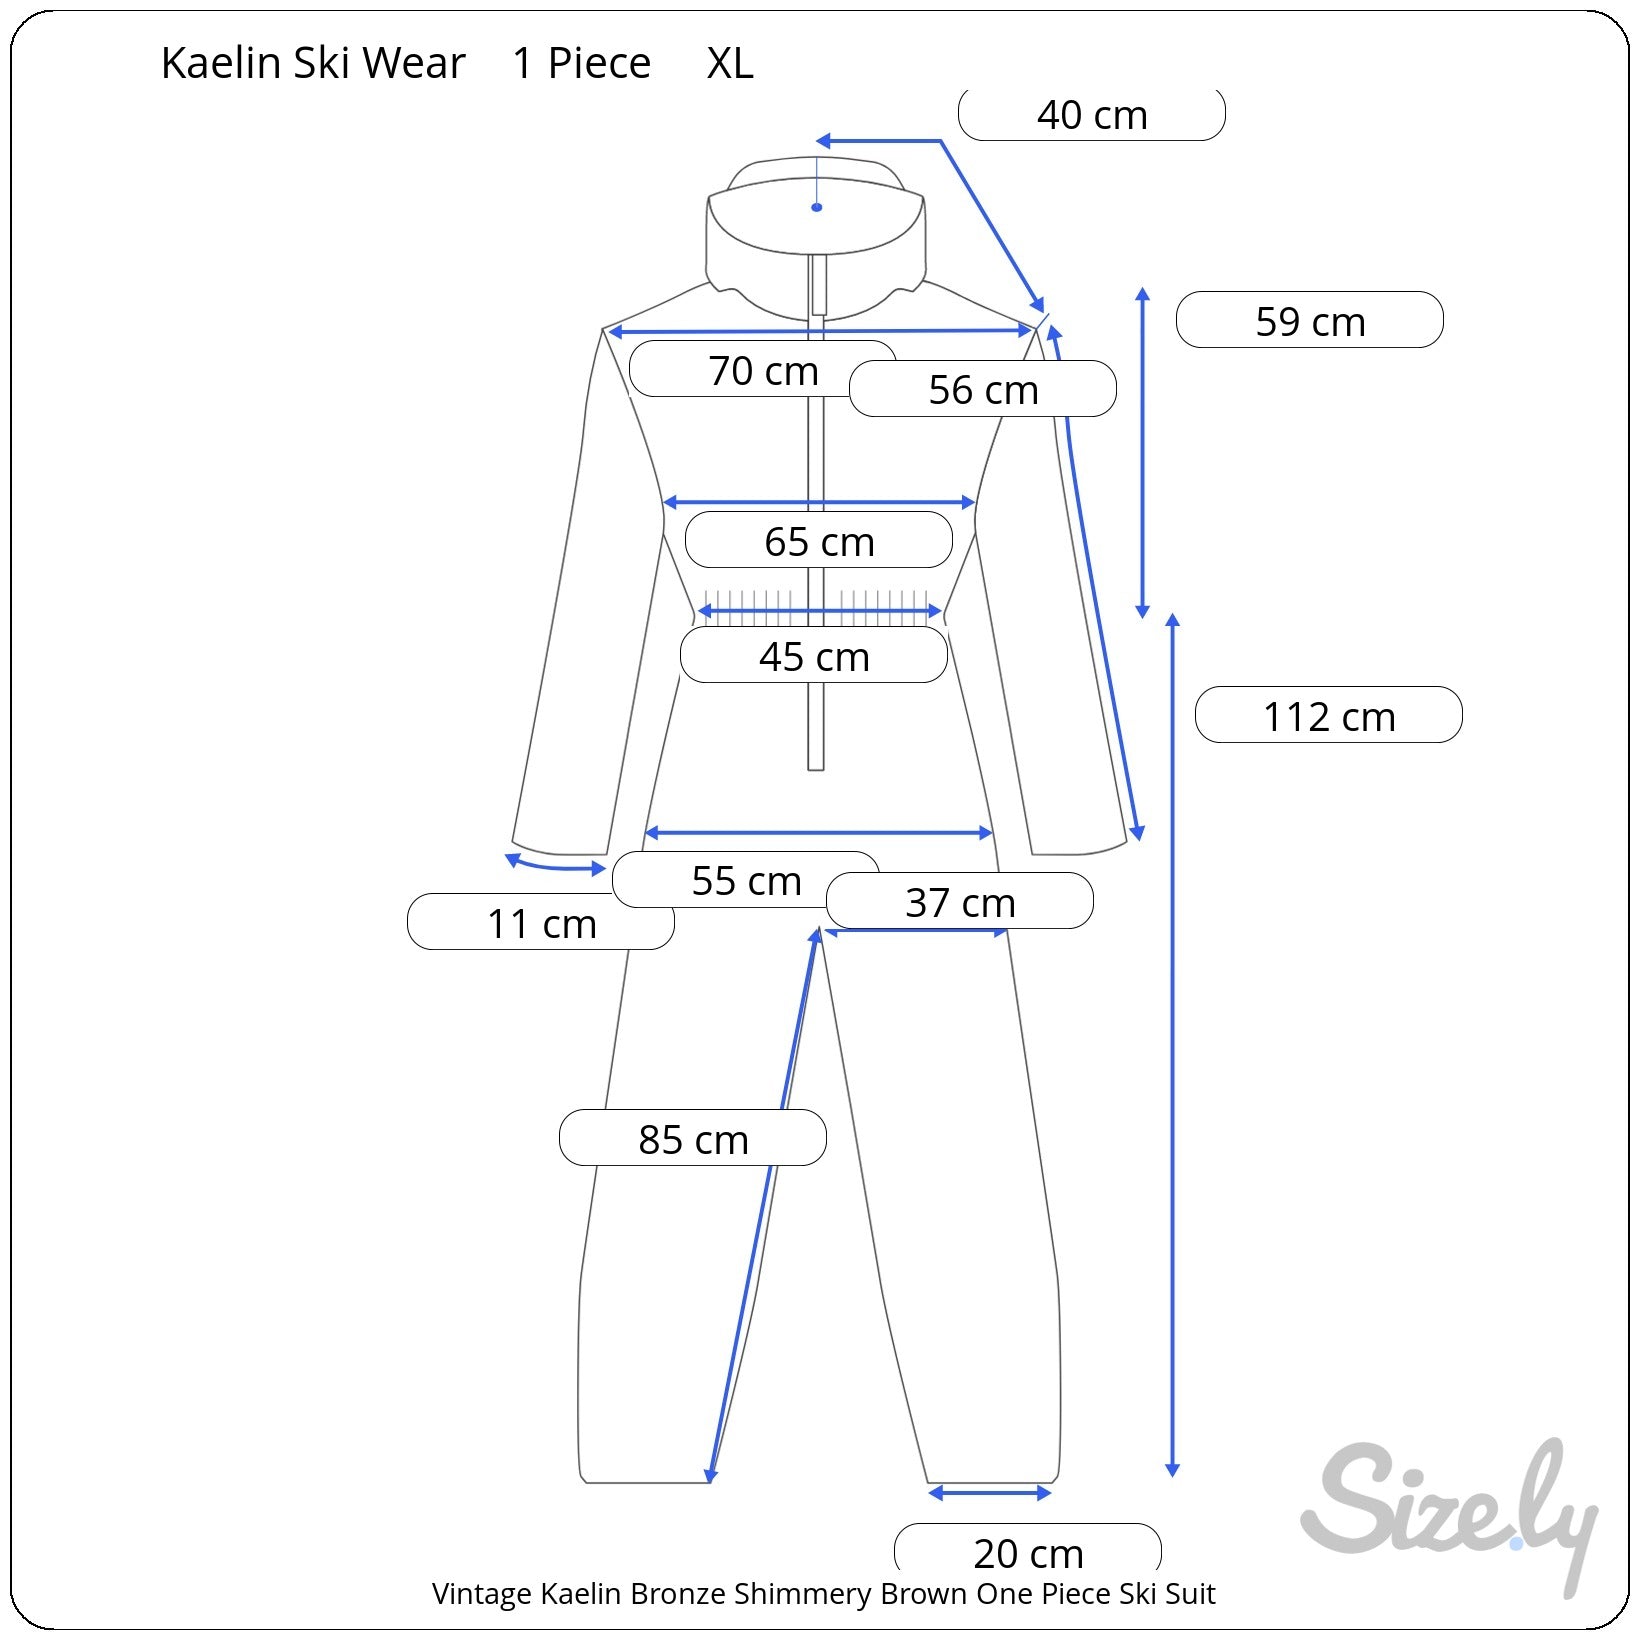 Vintage Kaelin Bronze Shimmery Brown One Piece Ski Suit, Measurements